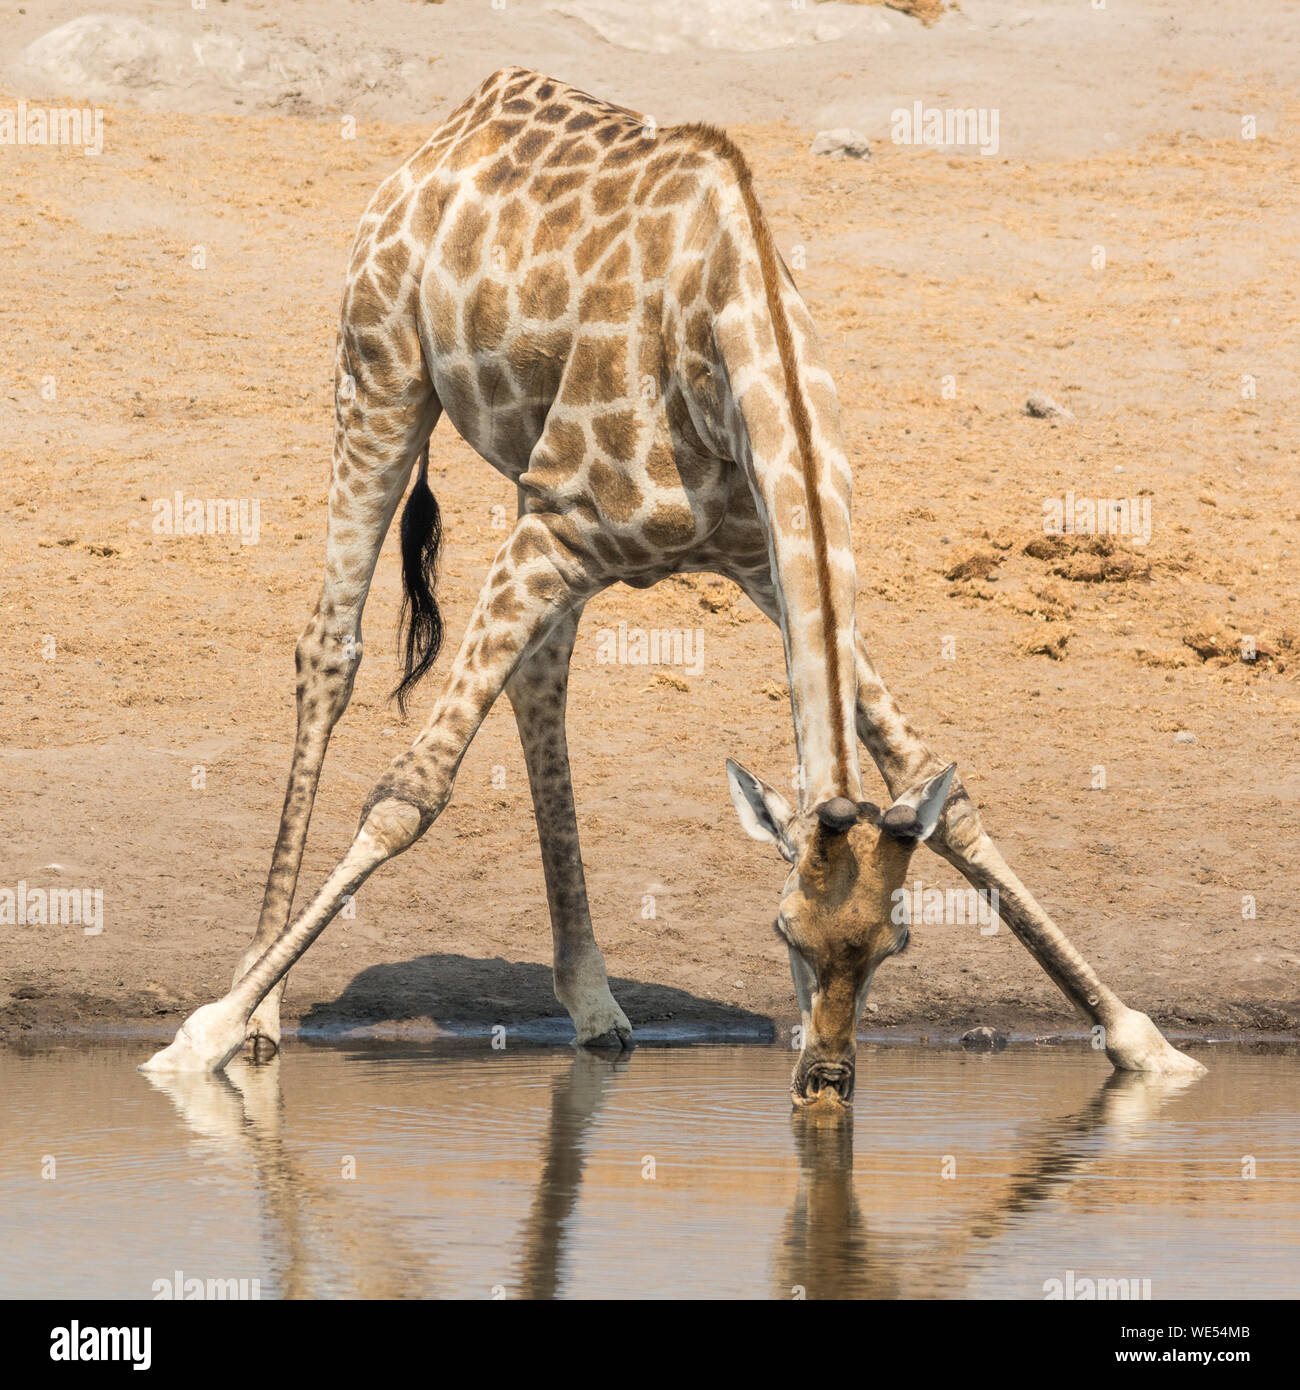 Giraffe Drinking Water From Lake Stock Photo